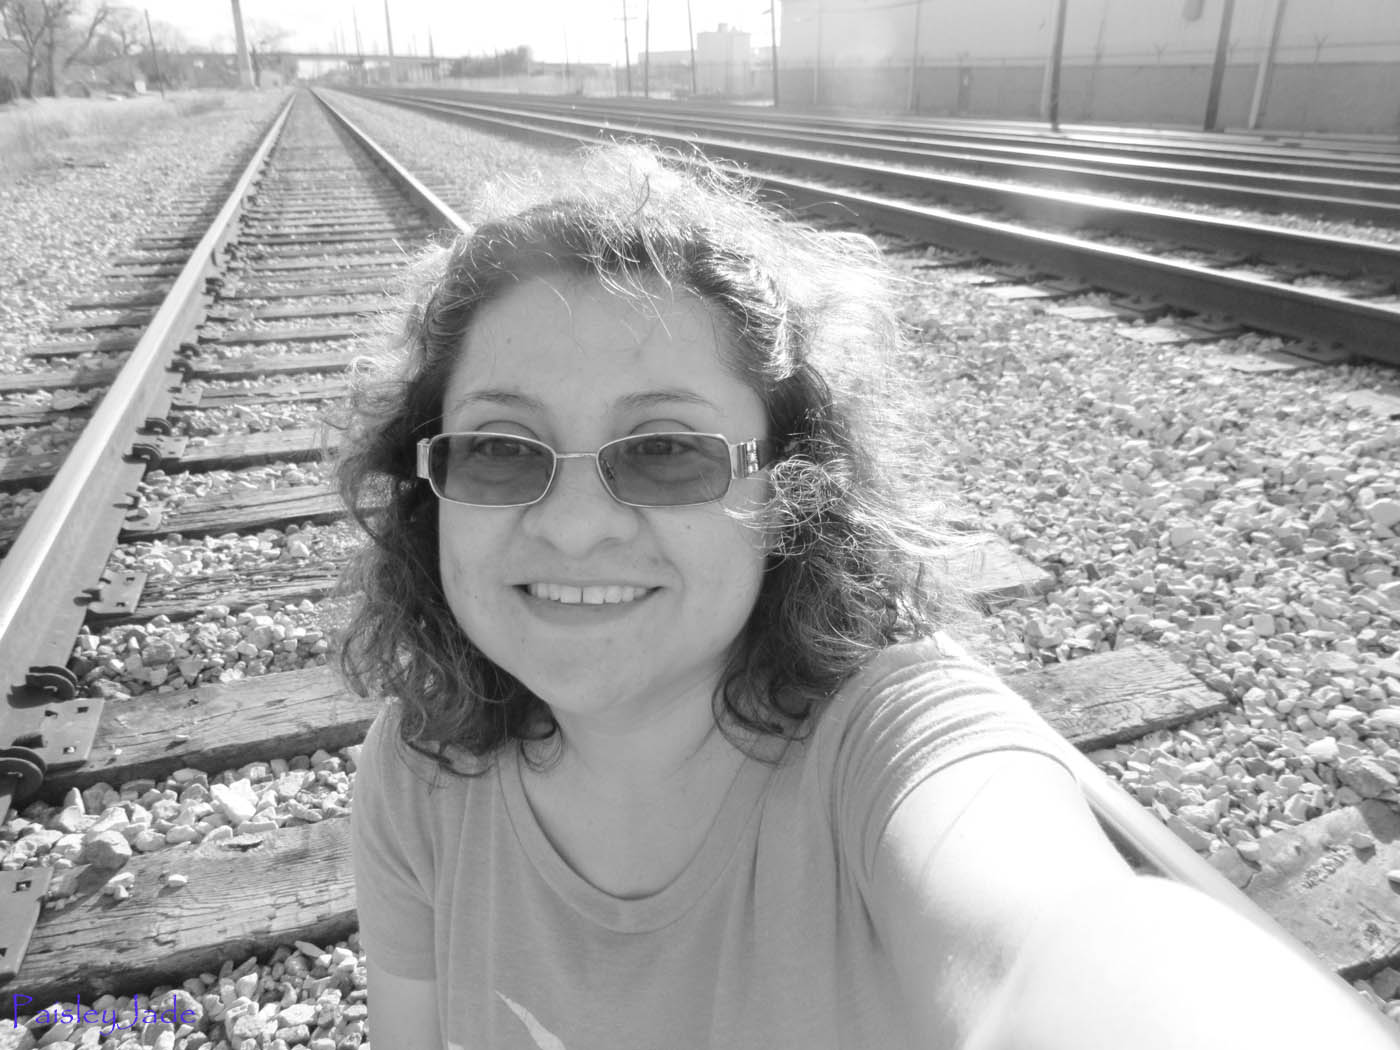 Me on the tracks 